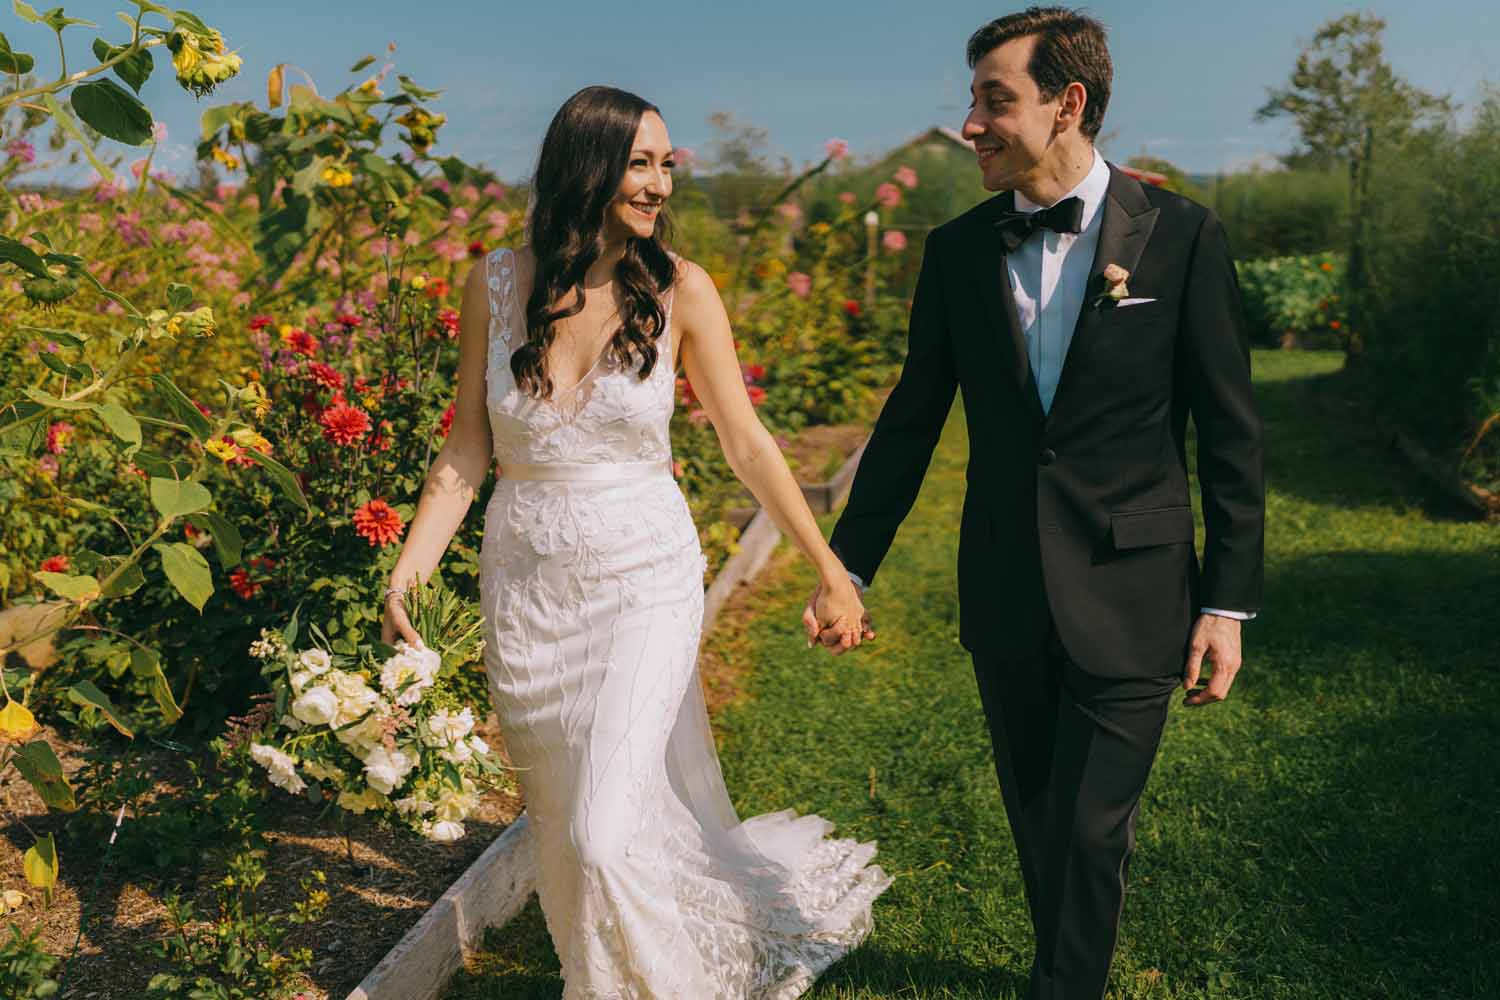 A bride and groom walk hand in hand through a flower garden under a blue cloudless sky. 